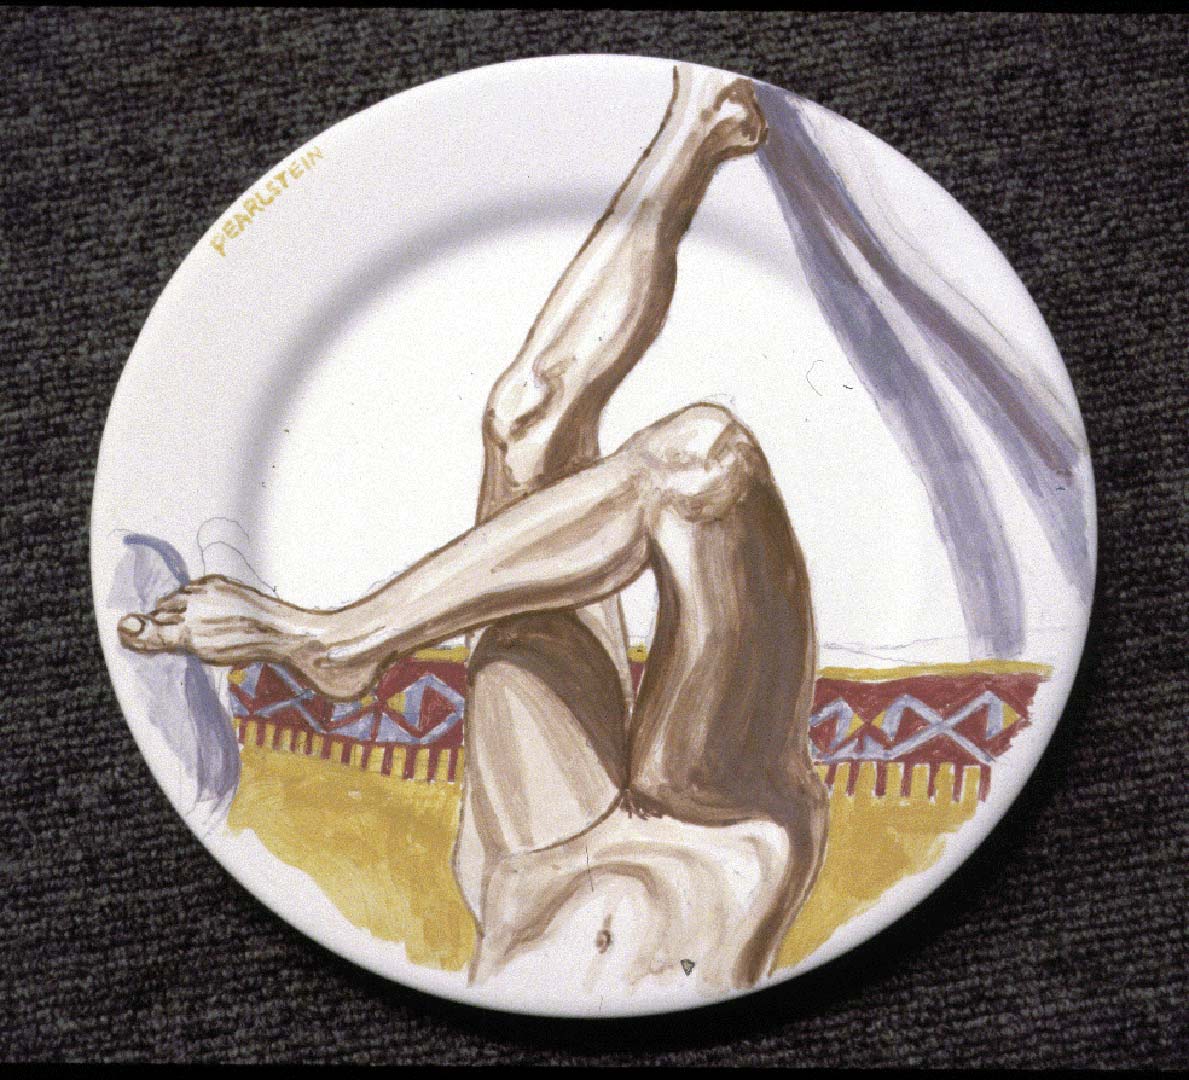 1997 Ceramic Plate Fundraiser Oil on Ceramic Plate Dimensions Unknown